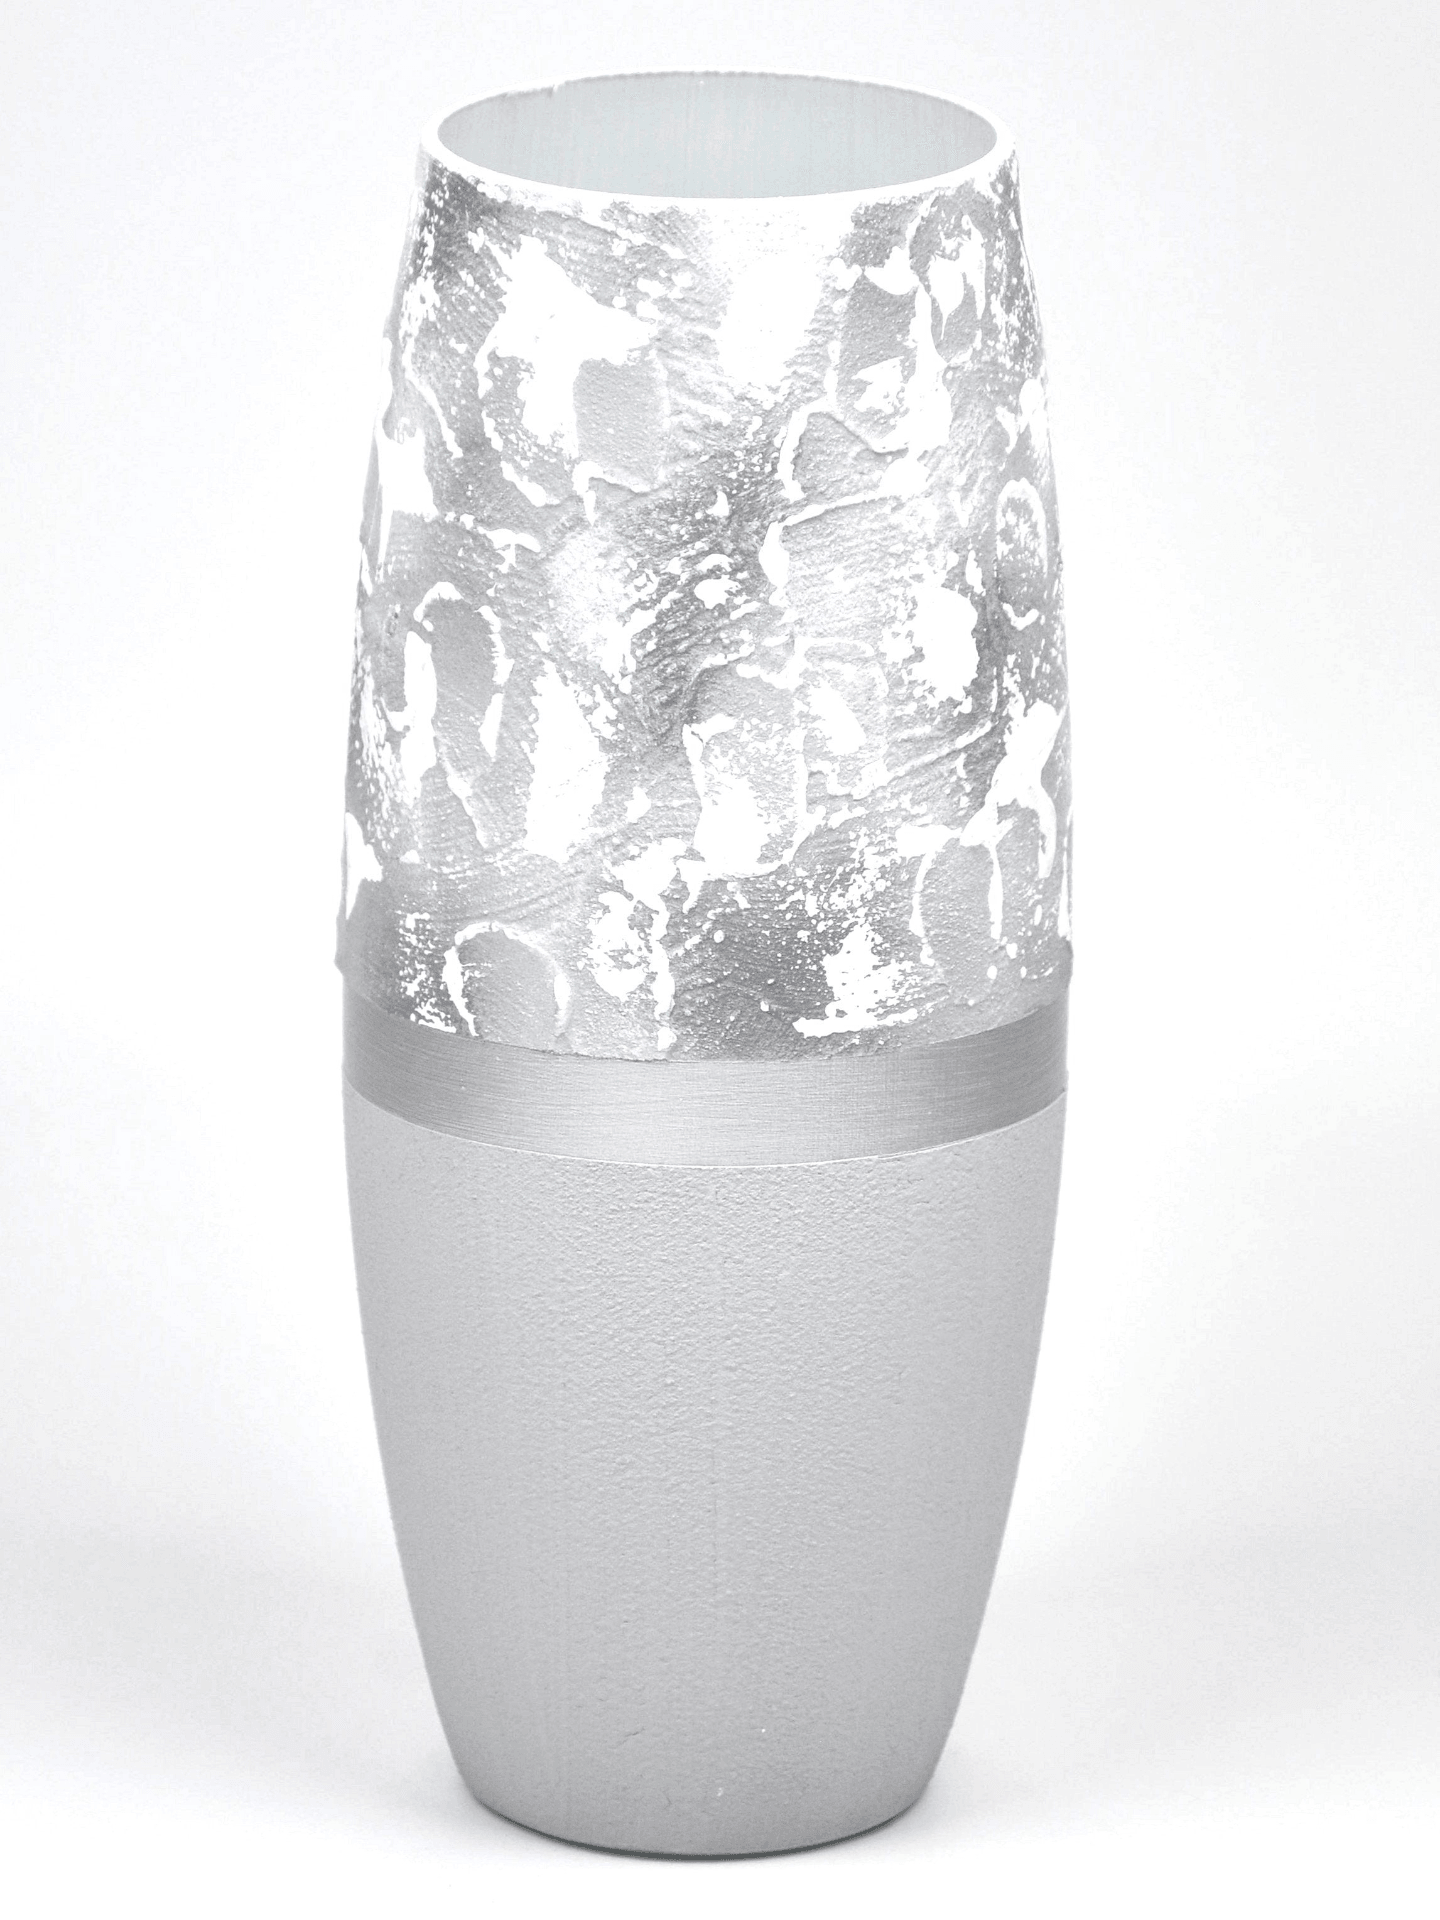 Marble Imitation Painted Art Glass Oval Vase for Flowers | Interior Design | Home Decor | Table vase | 7736/250/sh106  